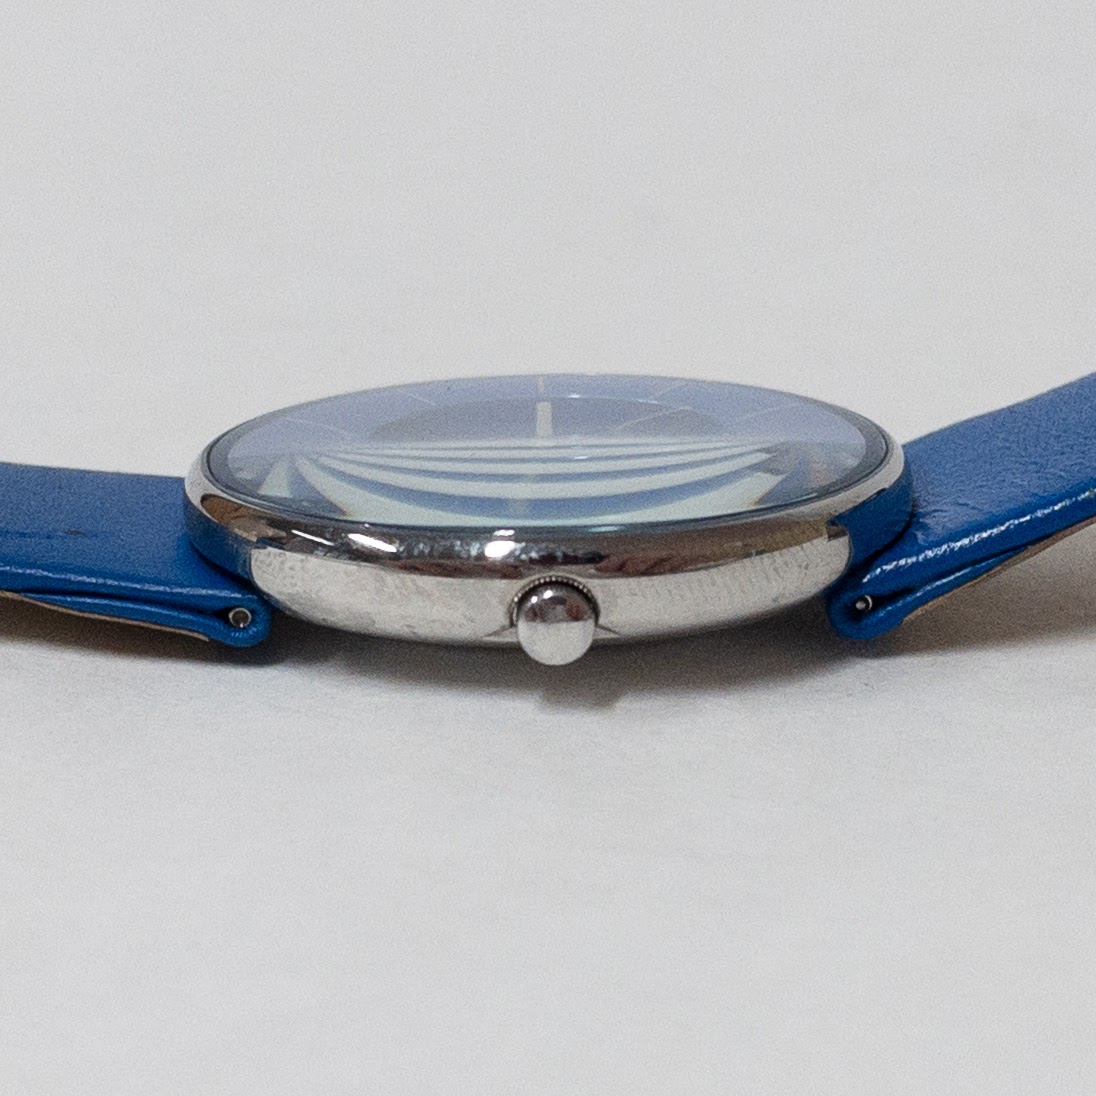 Alessi Quartz Wristwatch